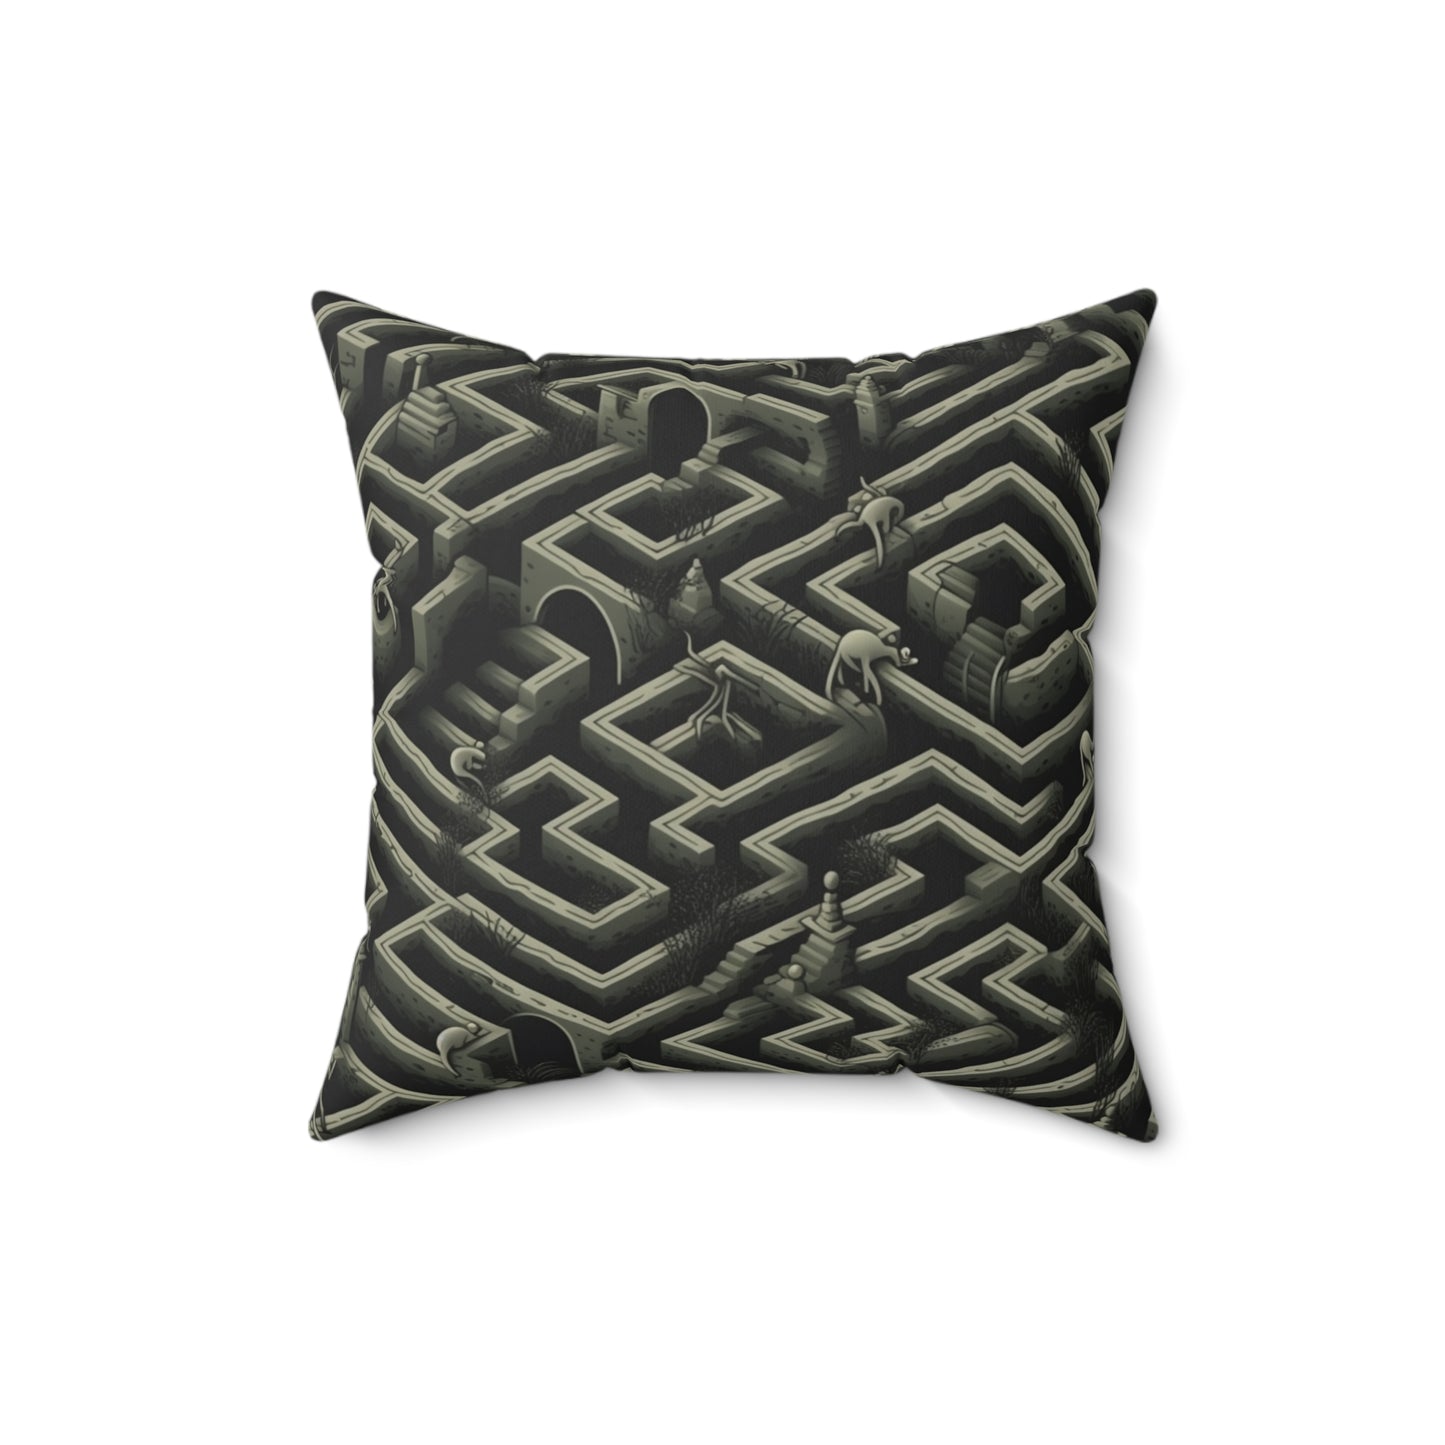 A-Maze-ing Spun Polyester Accent Throw Pillow